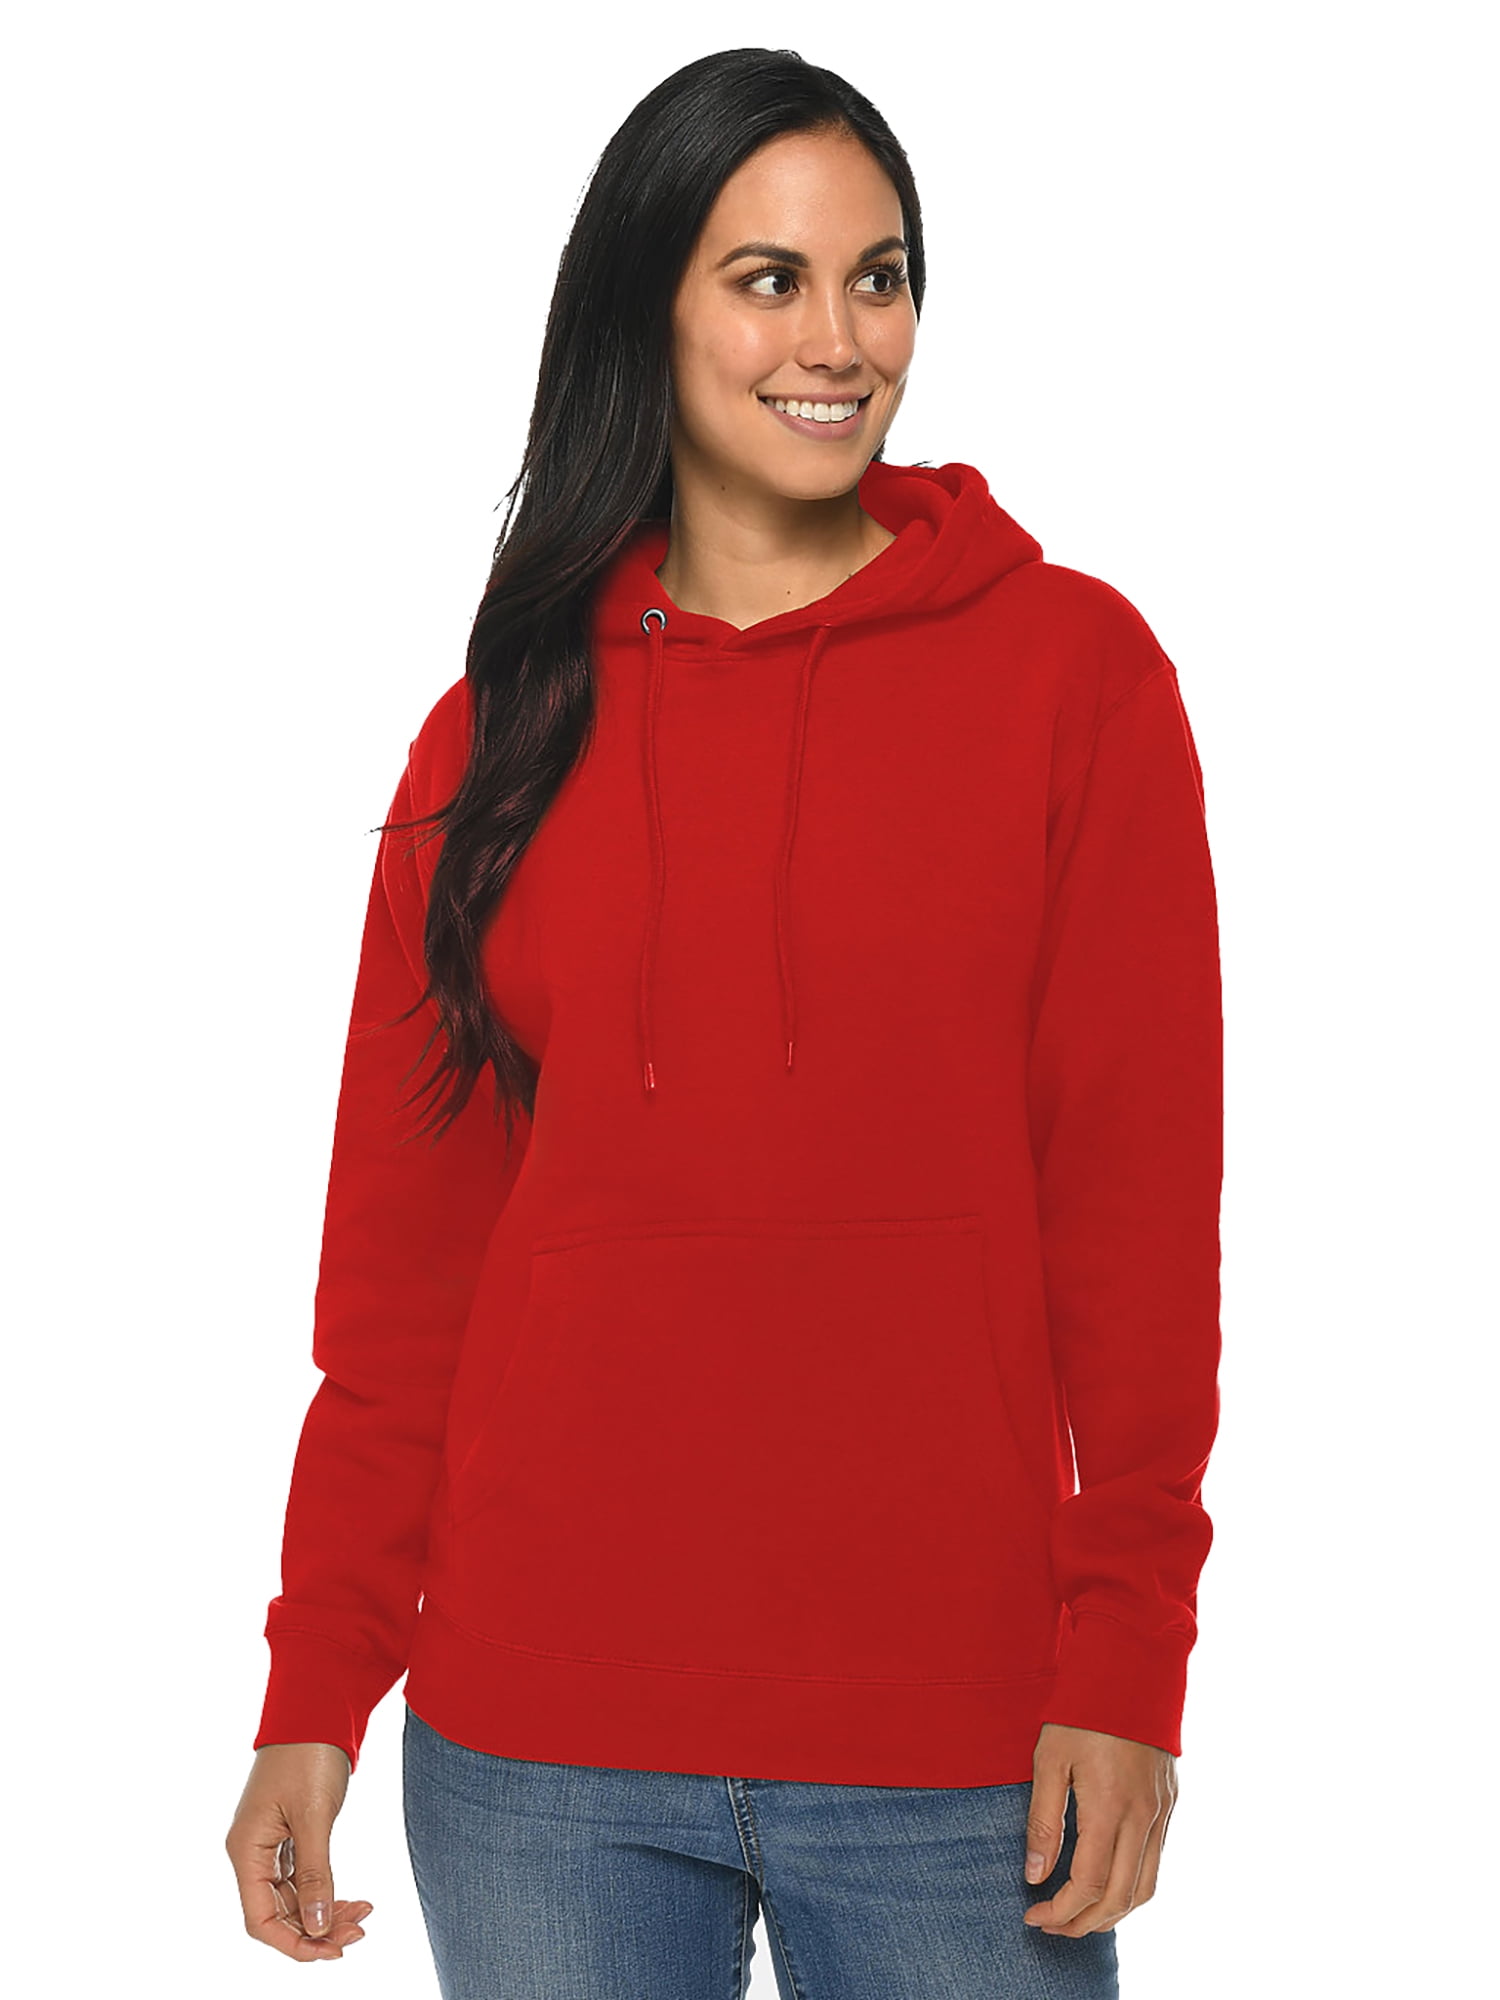 Unisex Pullover Hoodie for Women XS S M L XL 2XL 3XL Men Hoodie Casual  Plain Hoody for Men - Red Hoodie Red Sweatshirt